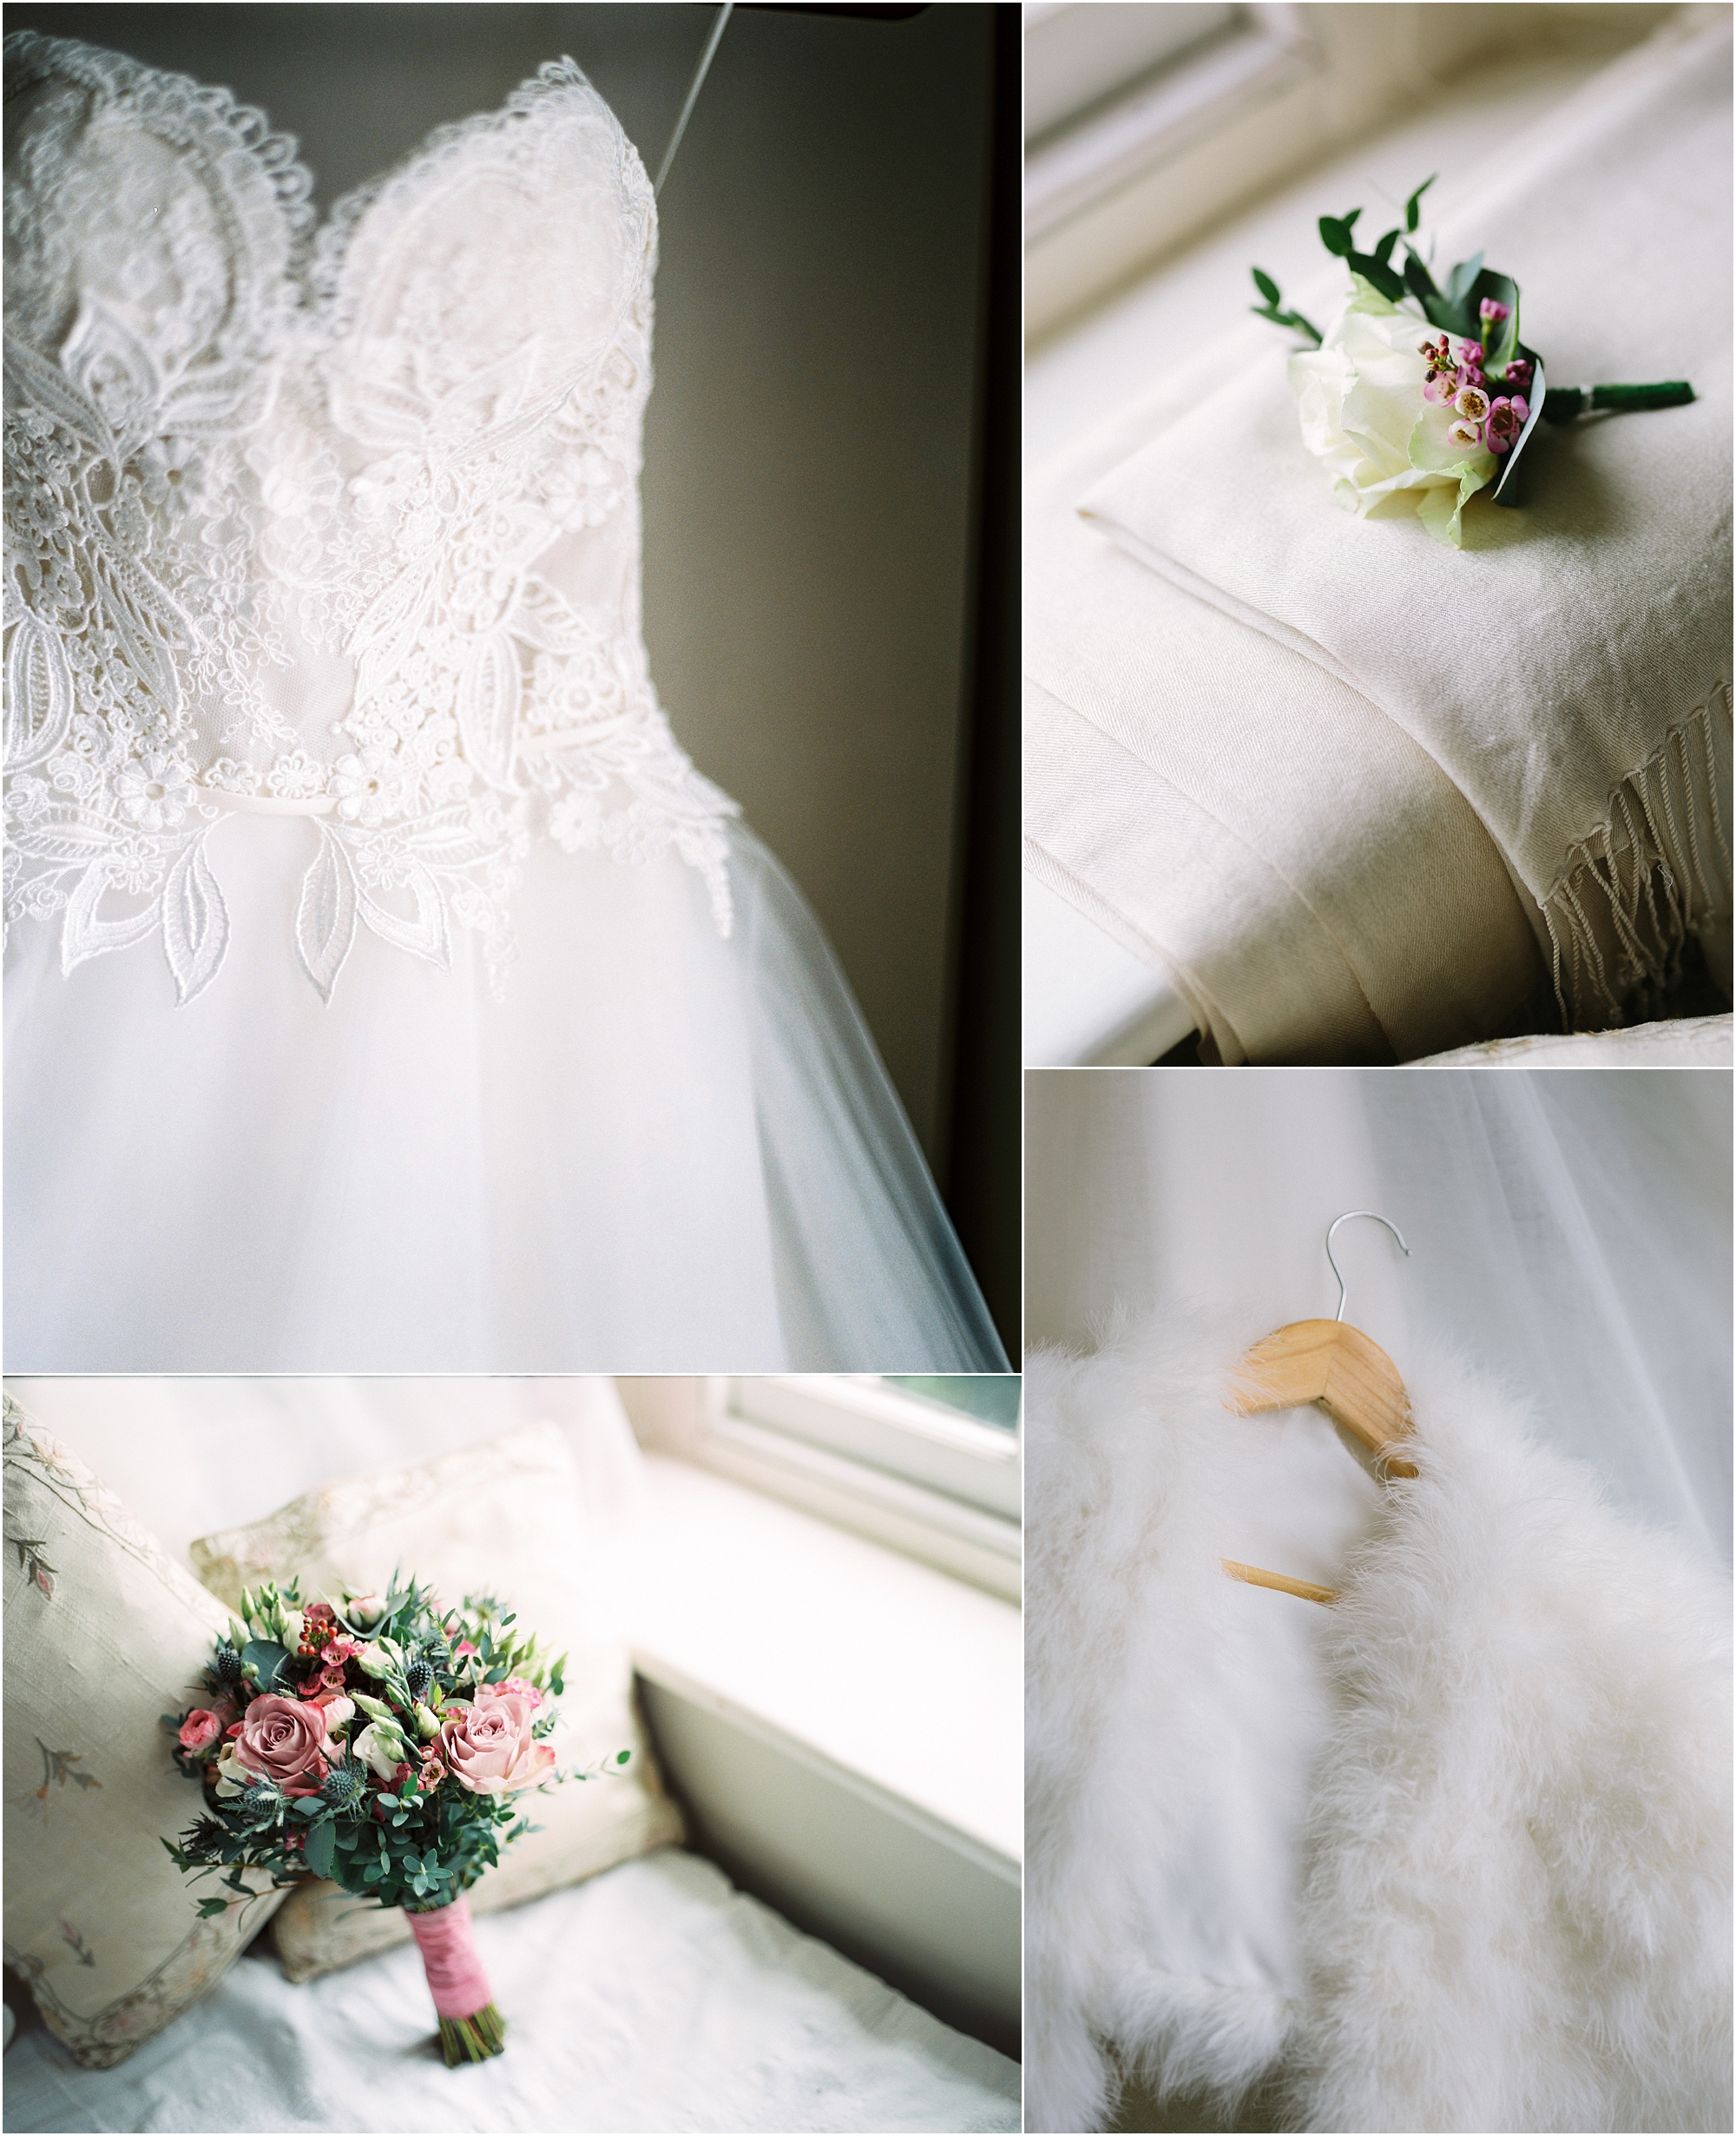 Wedding dress and flowers